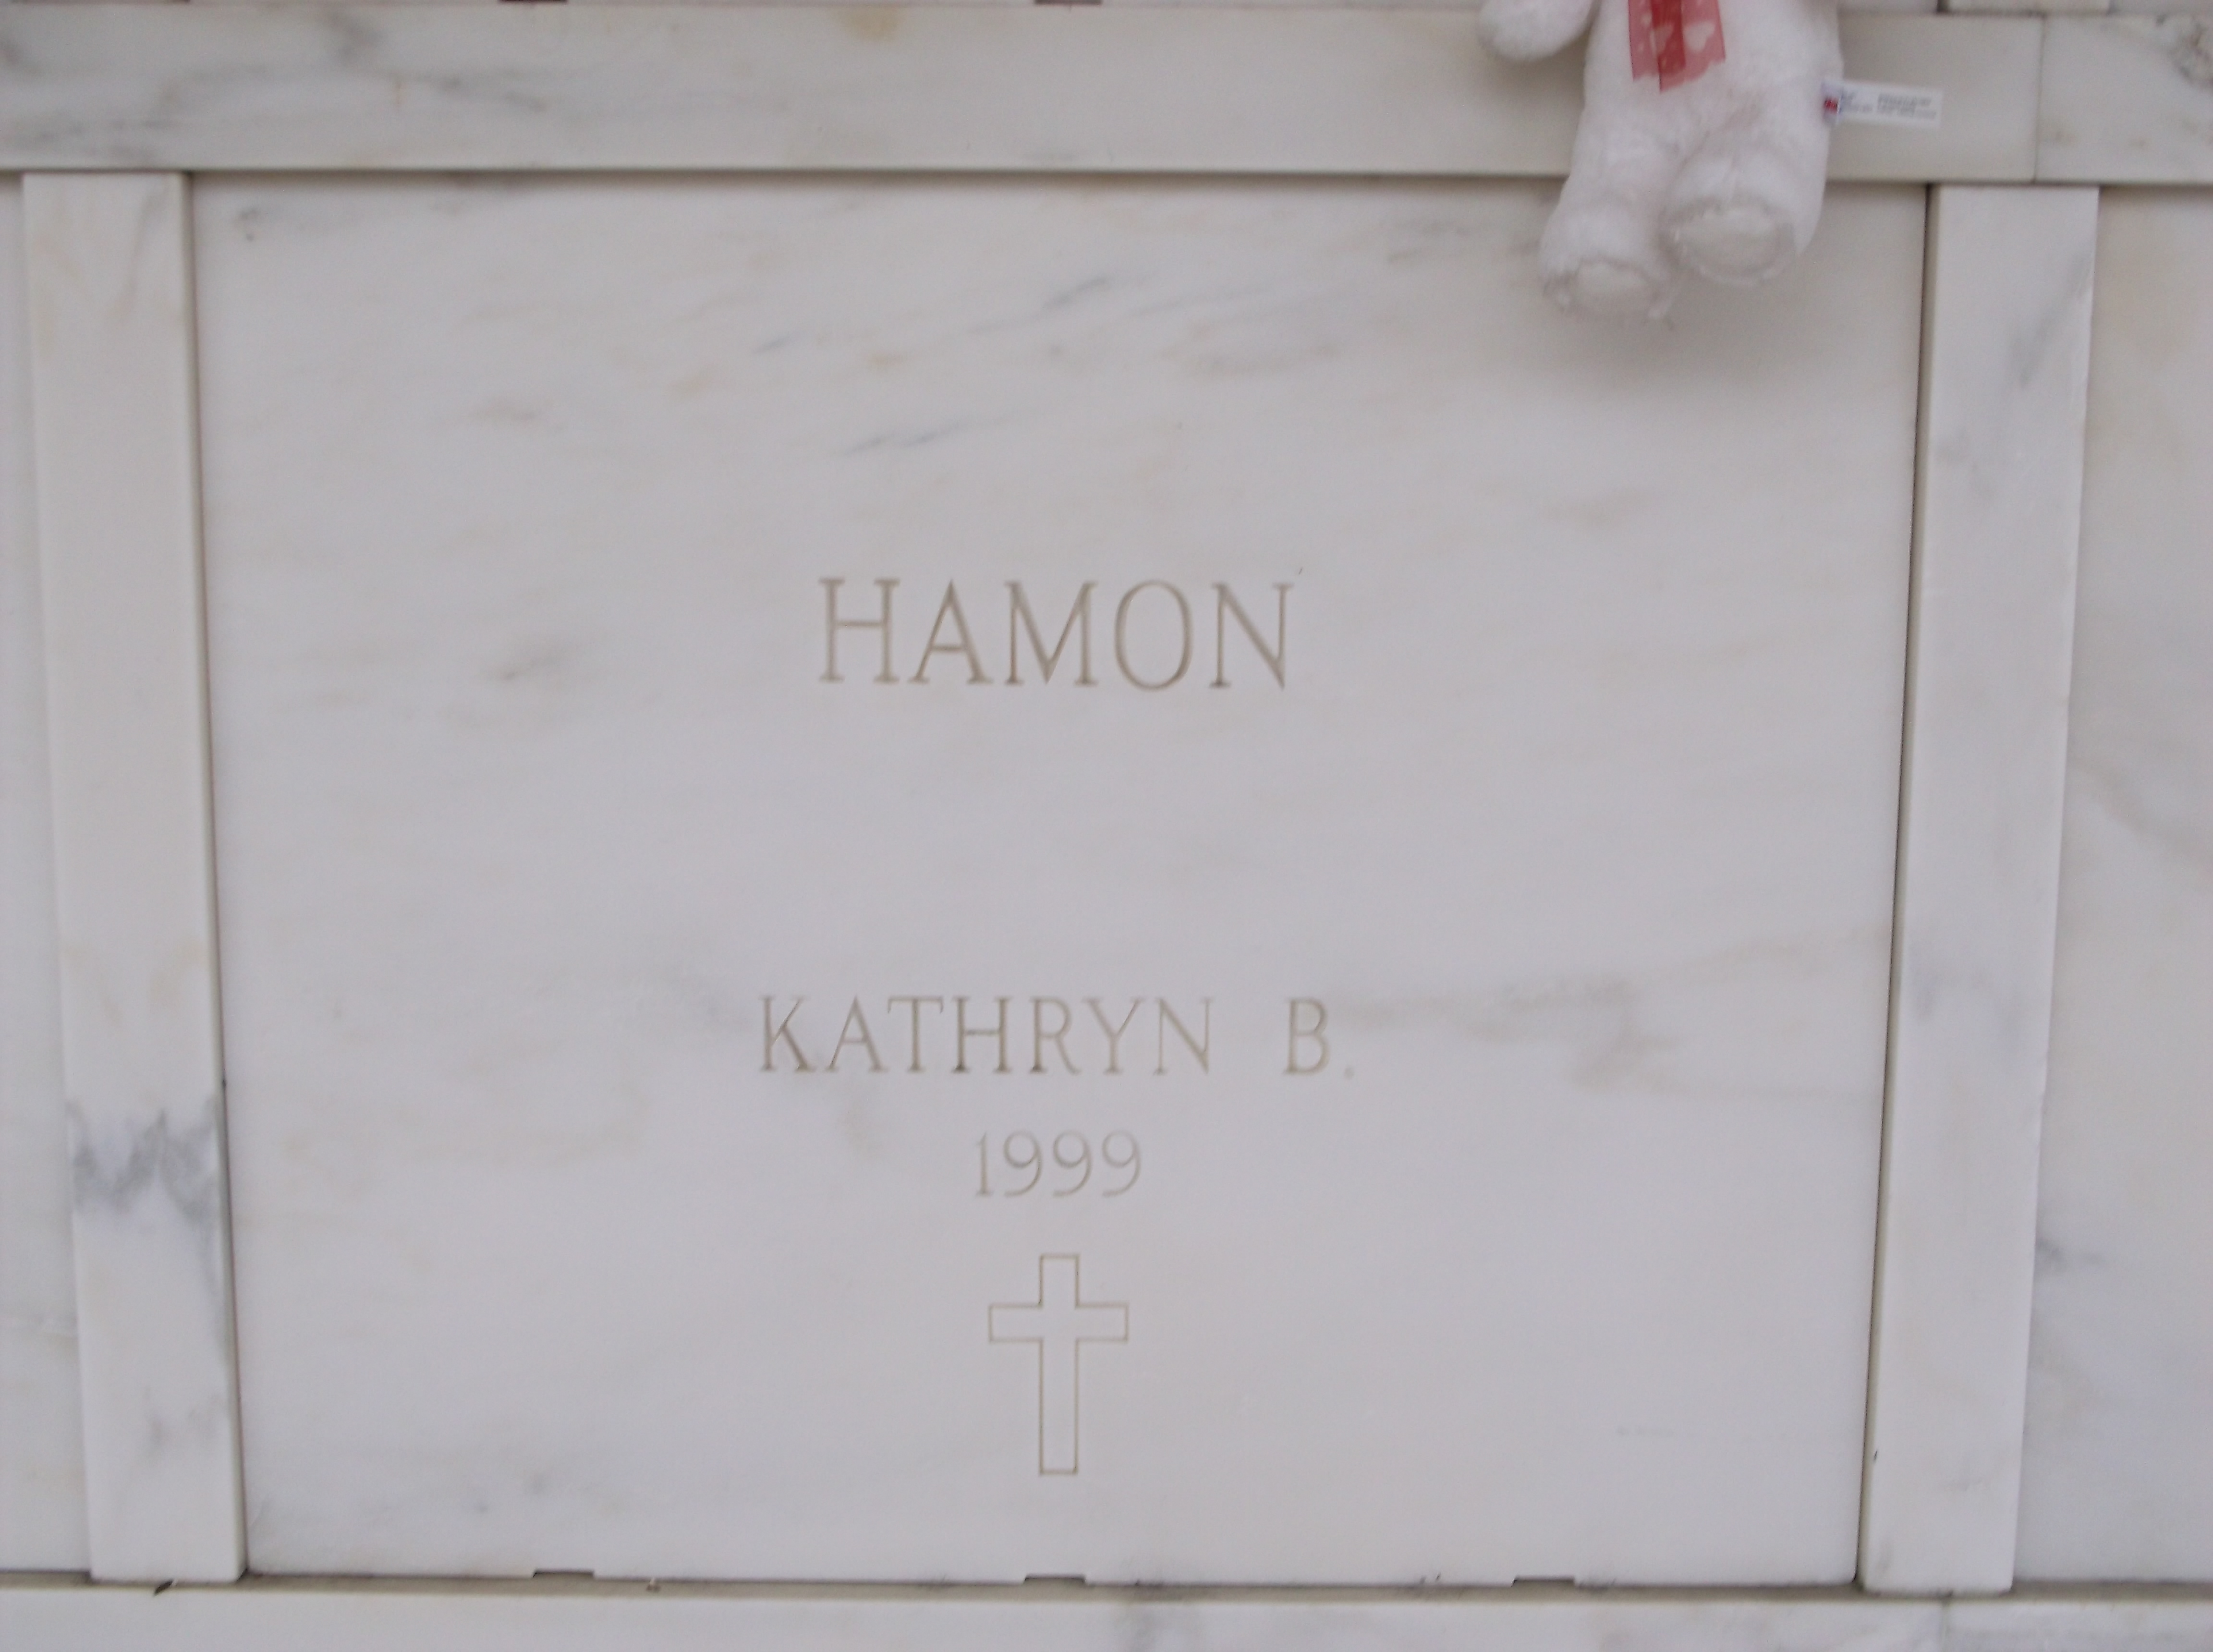 Kathryn B Hamon